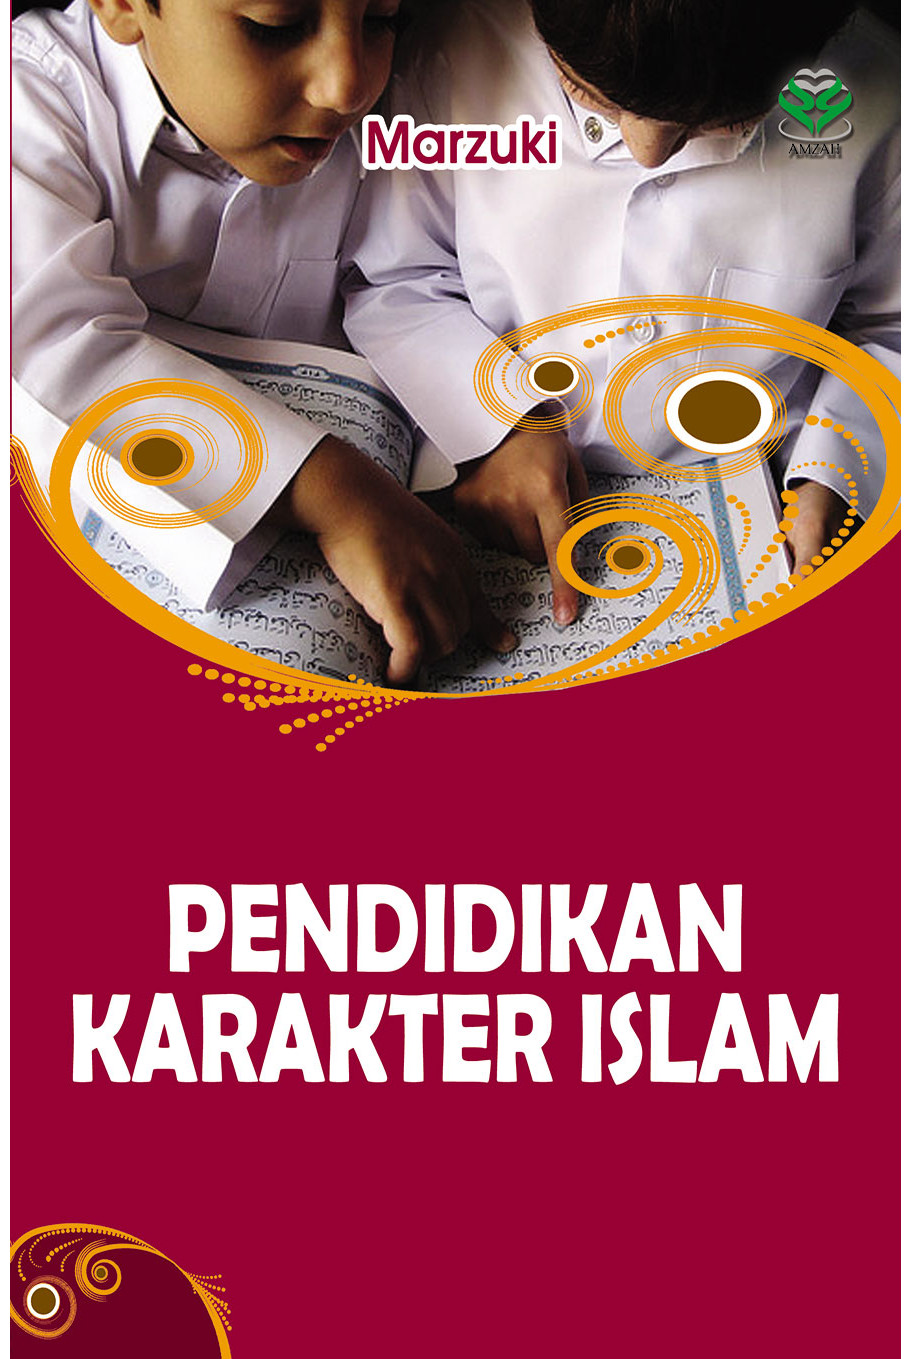 Pendidikan Karakter Islam